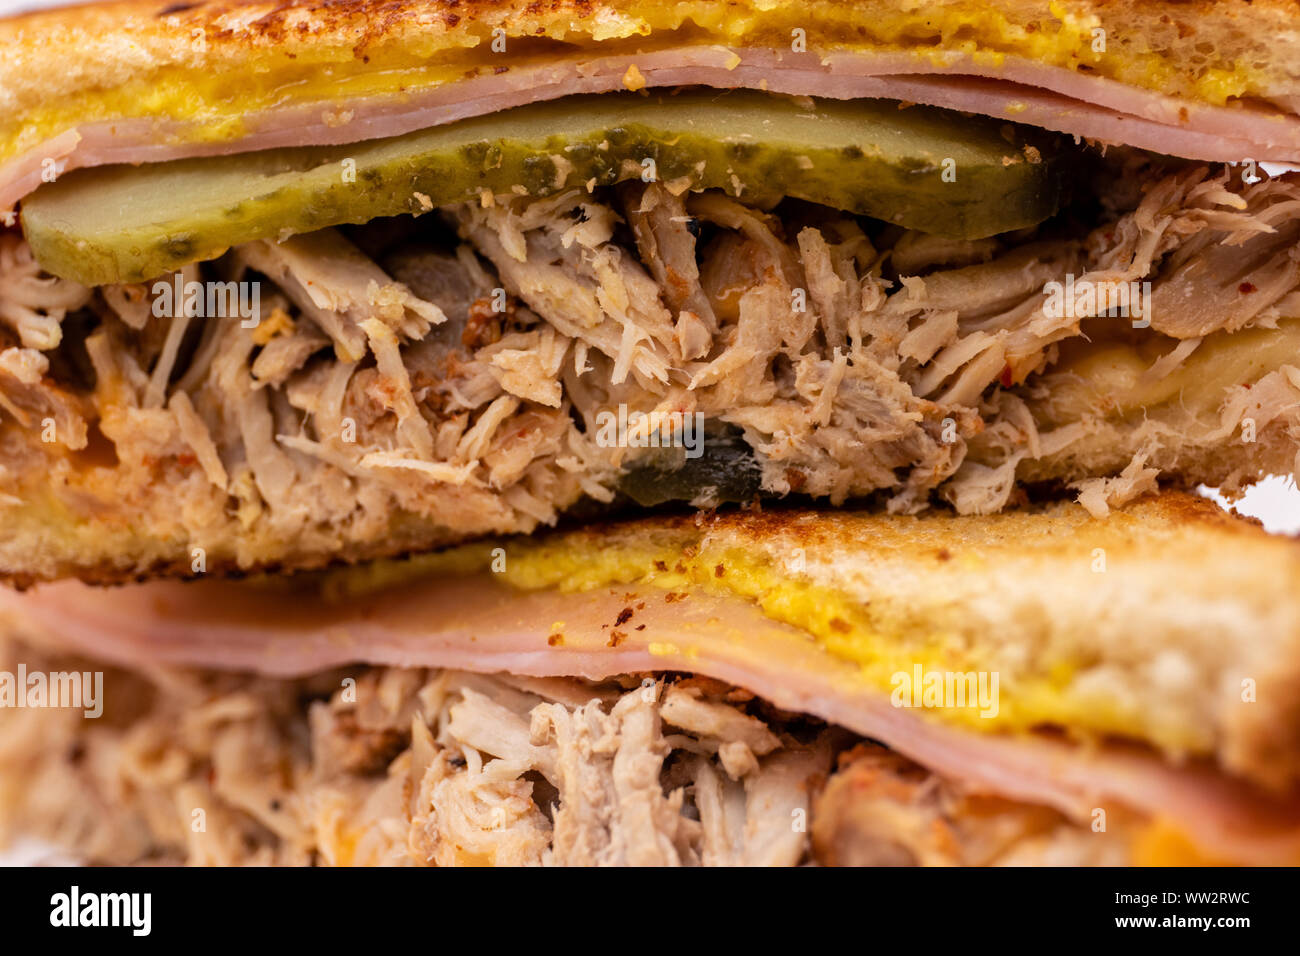 BBQ pulled pork montecristo sandwich closeup view Stock Photo